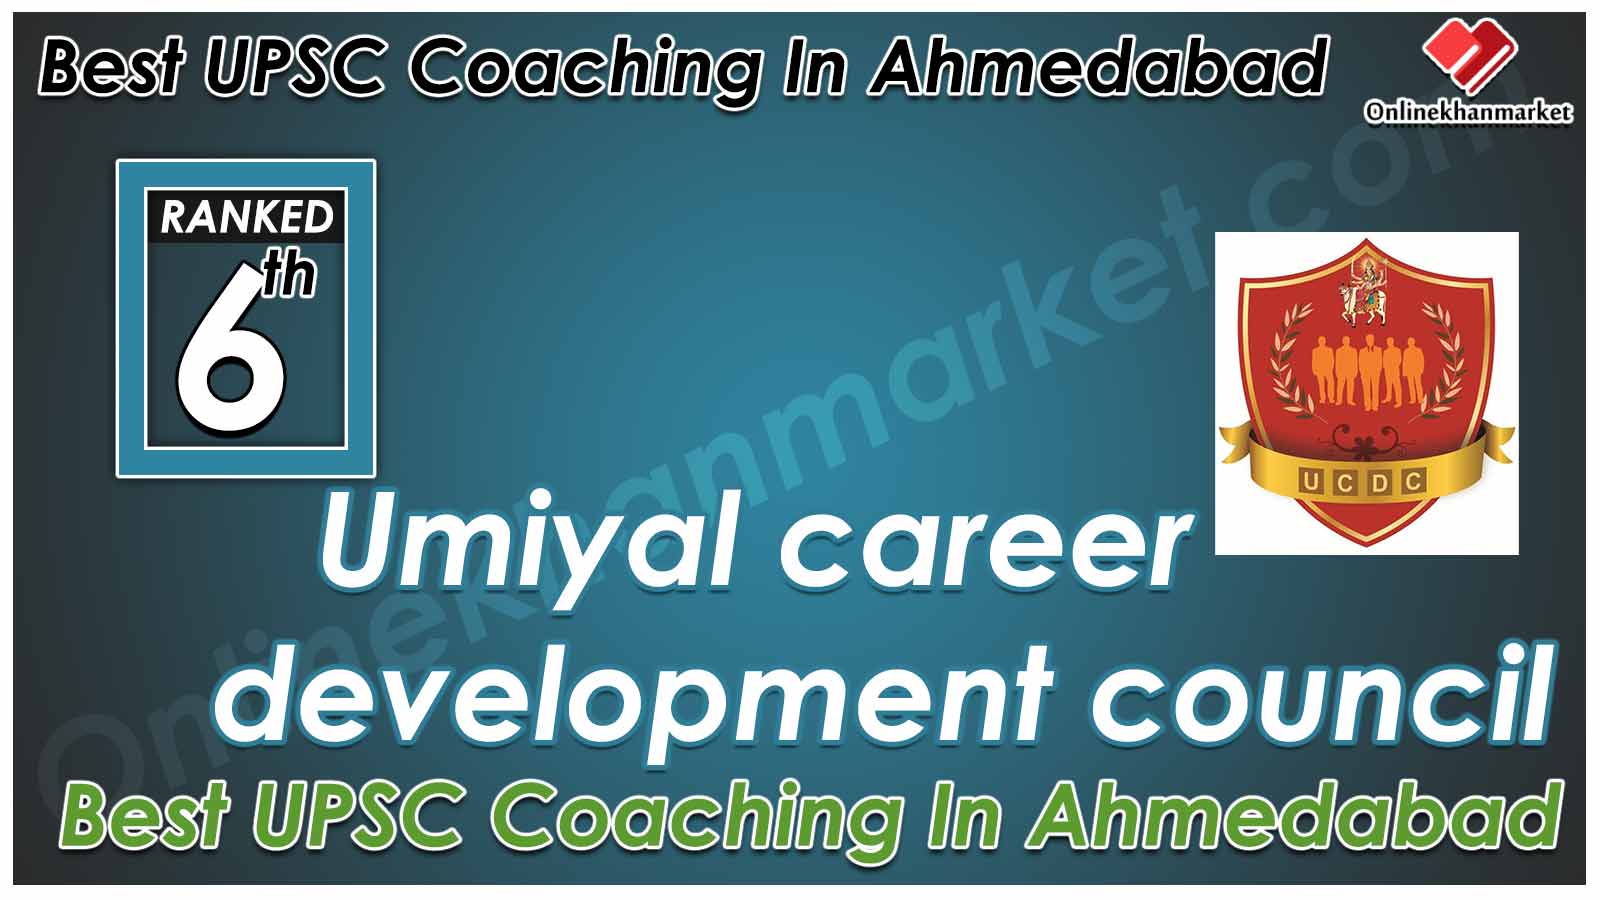 Top UPSC Coaching in Ahmedabad